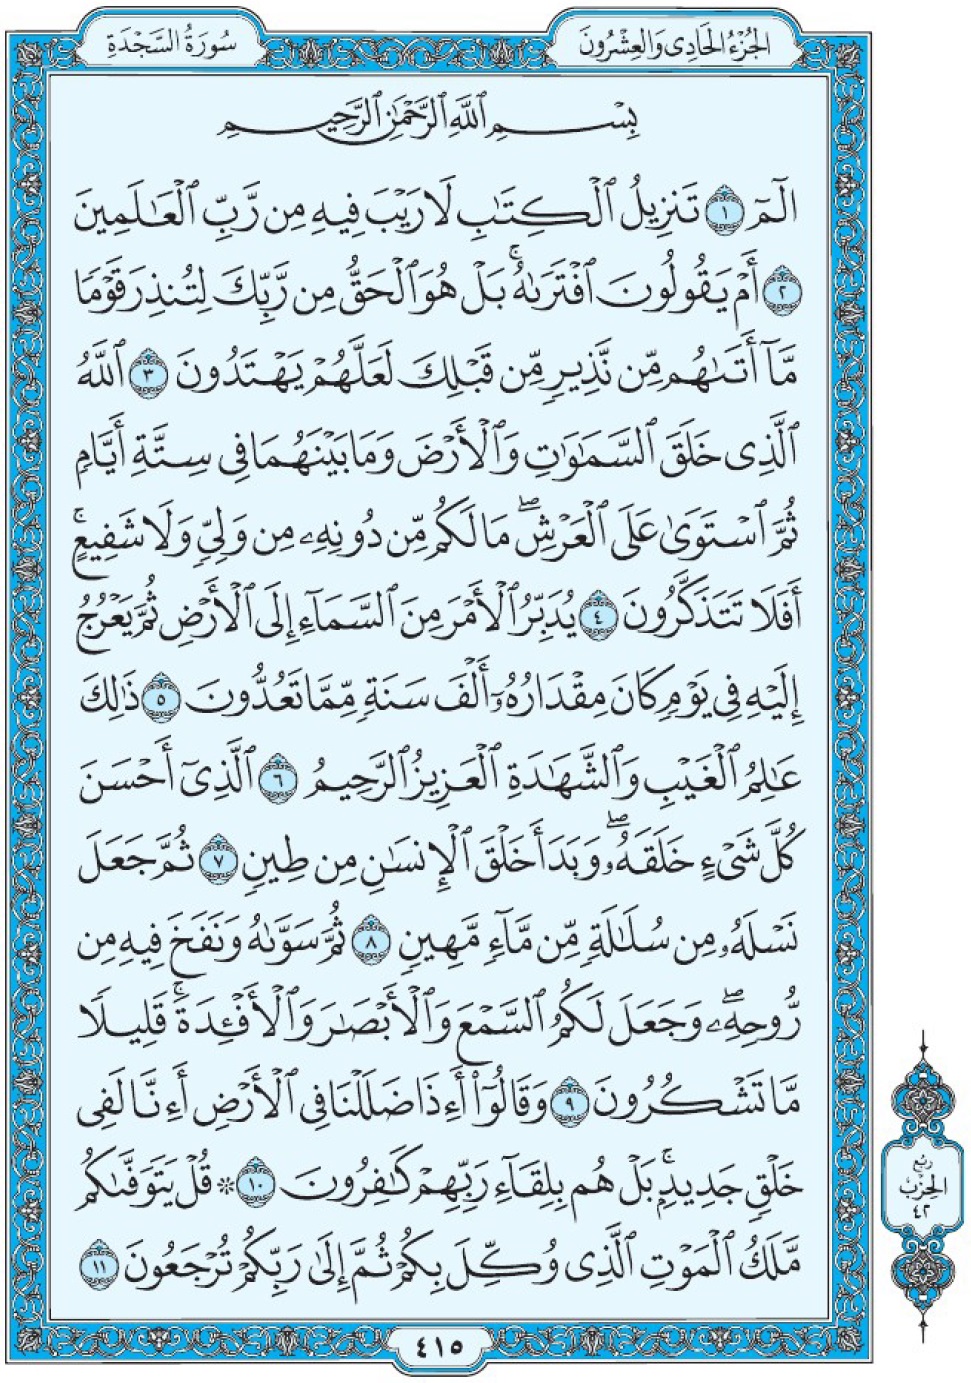 Коран Мединский мусхаф страница 415, сура 32 Ас-Саджда سورة ٣٢ الروم 